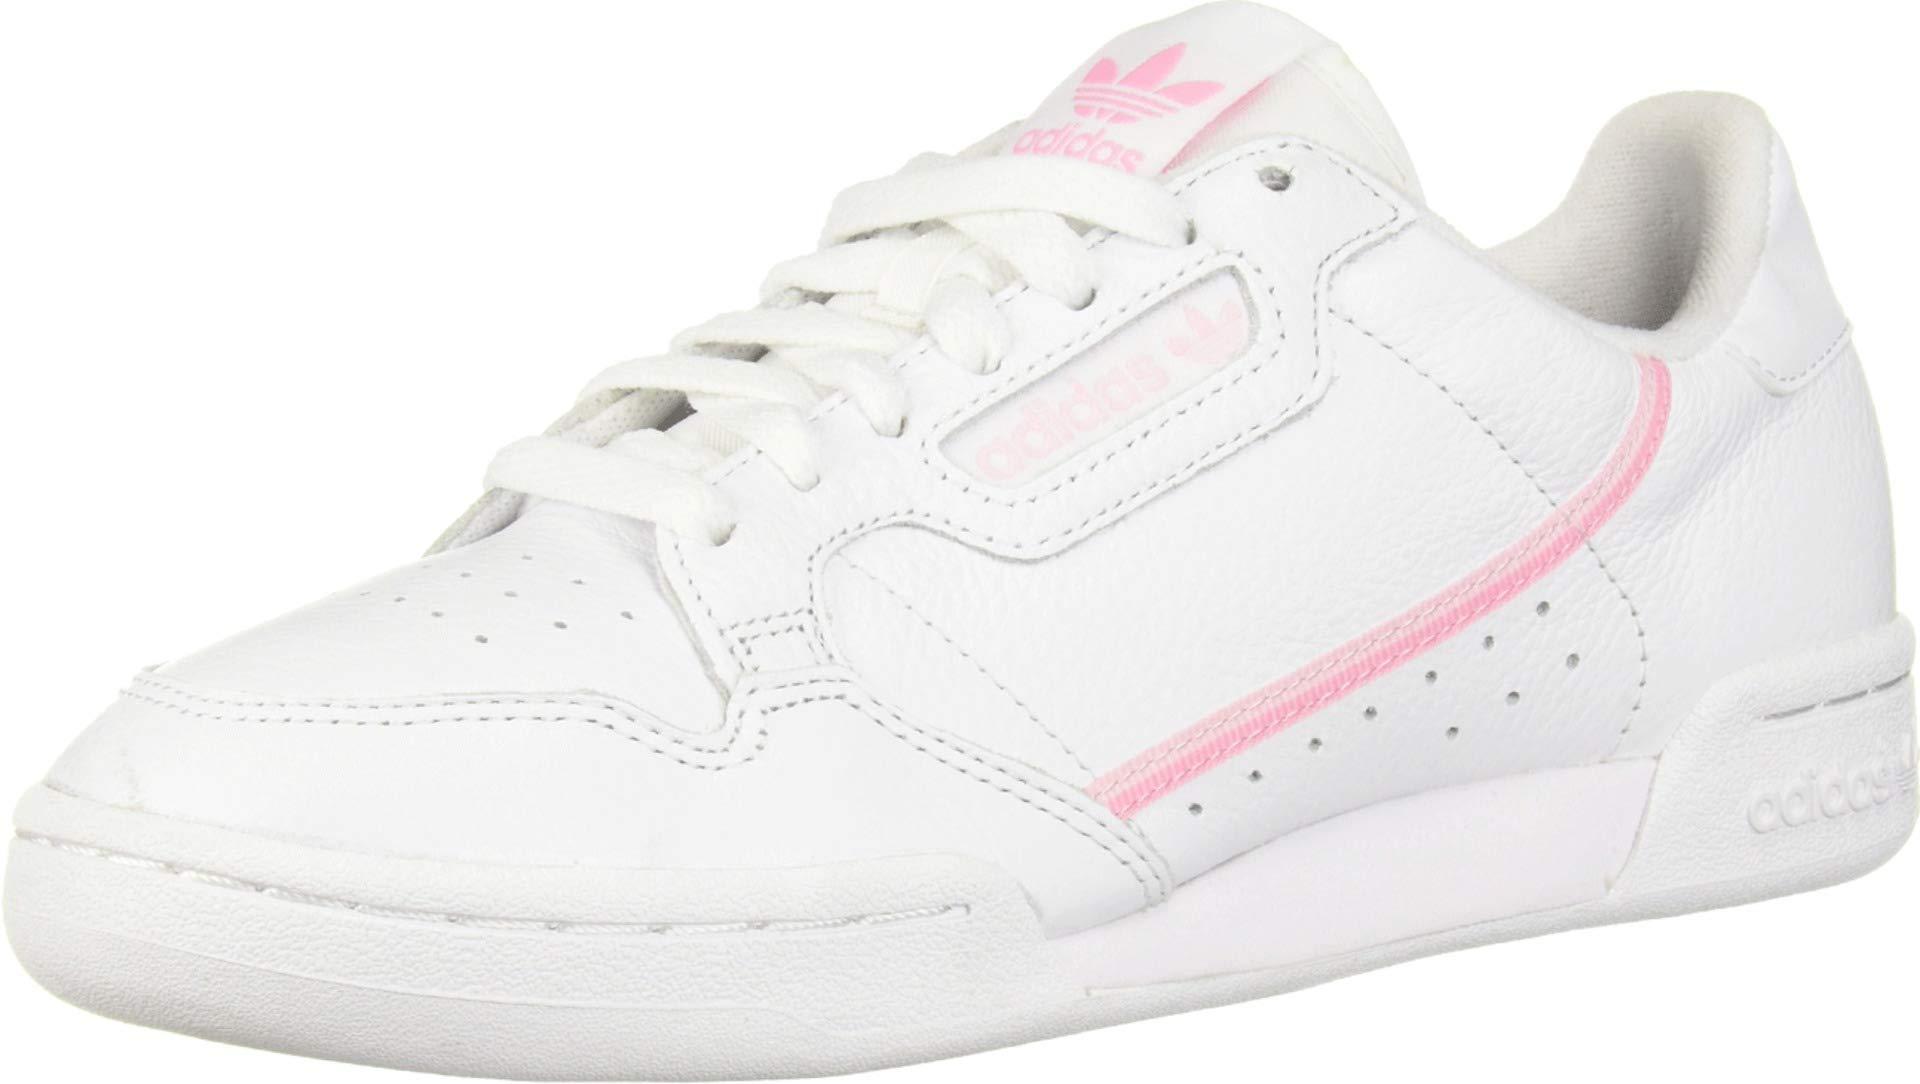 adidas Originals 80 - White/pink - 55% -